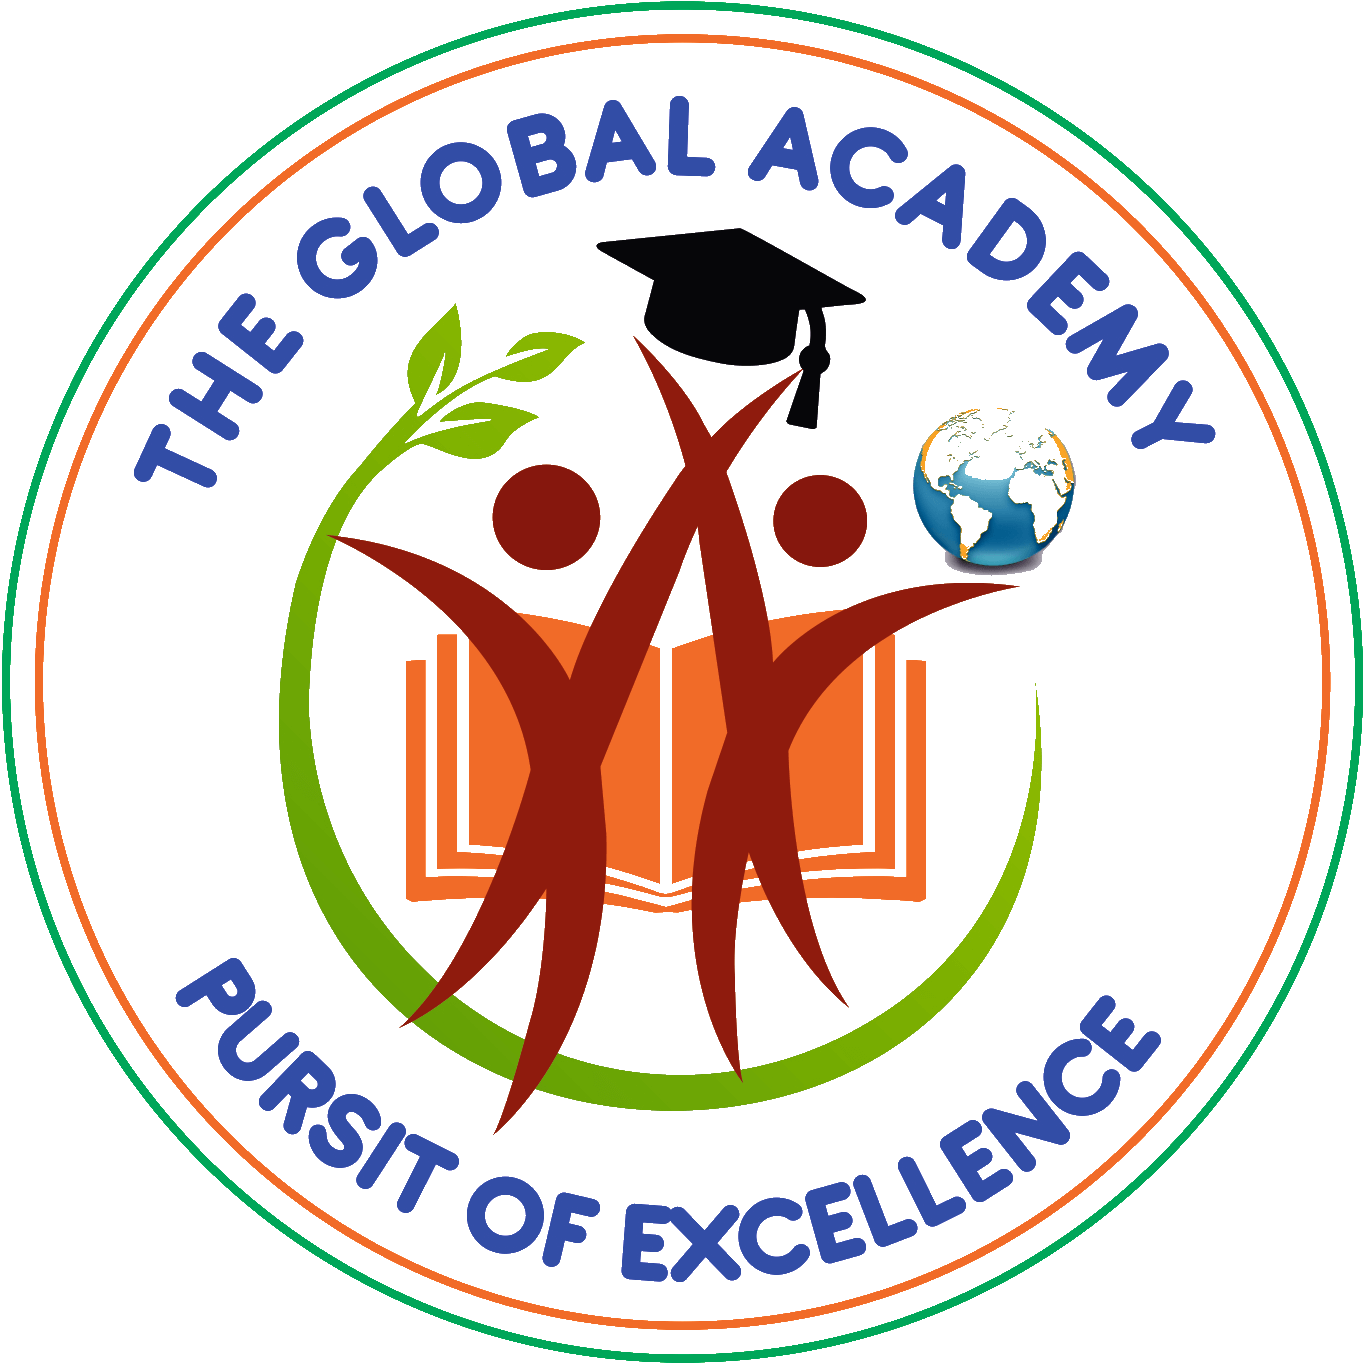 The Global Academy